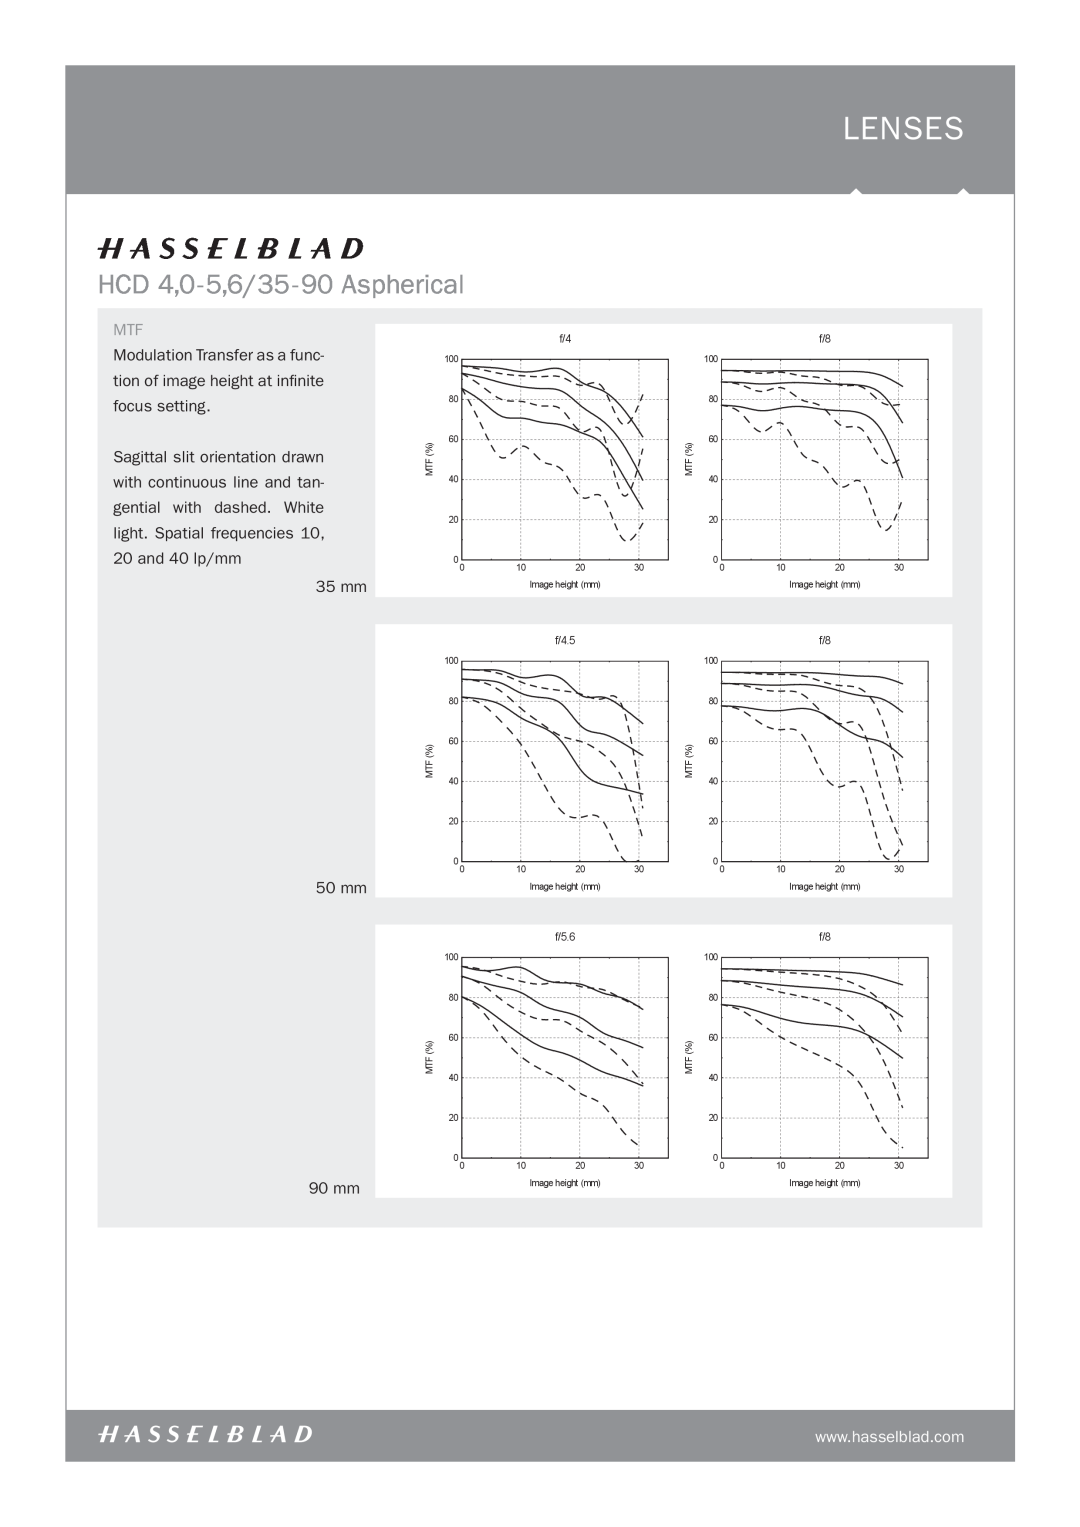 Hasselblad 6 / 35-90 Aspherical manual Lenses, HCD 4,0-5,6/35-90 Aspherical 